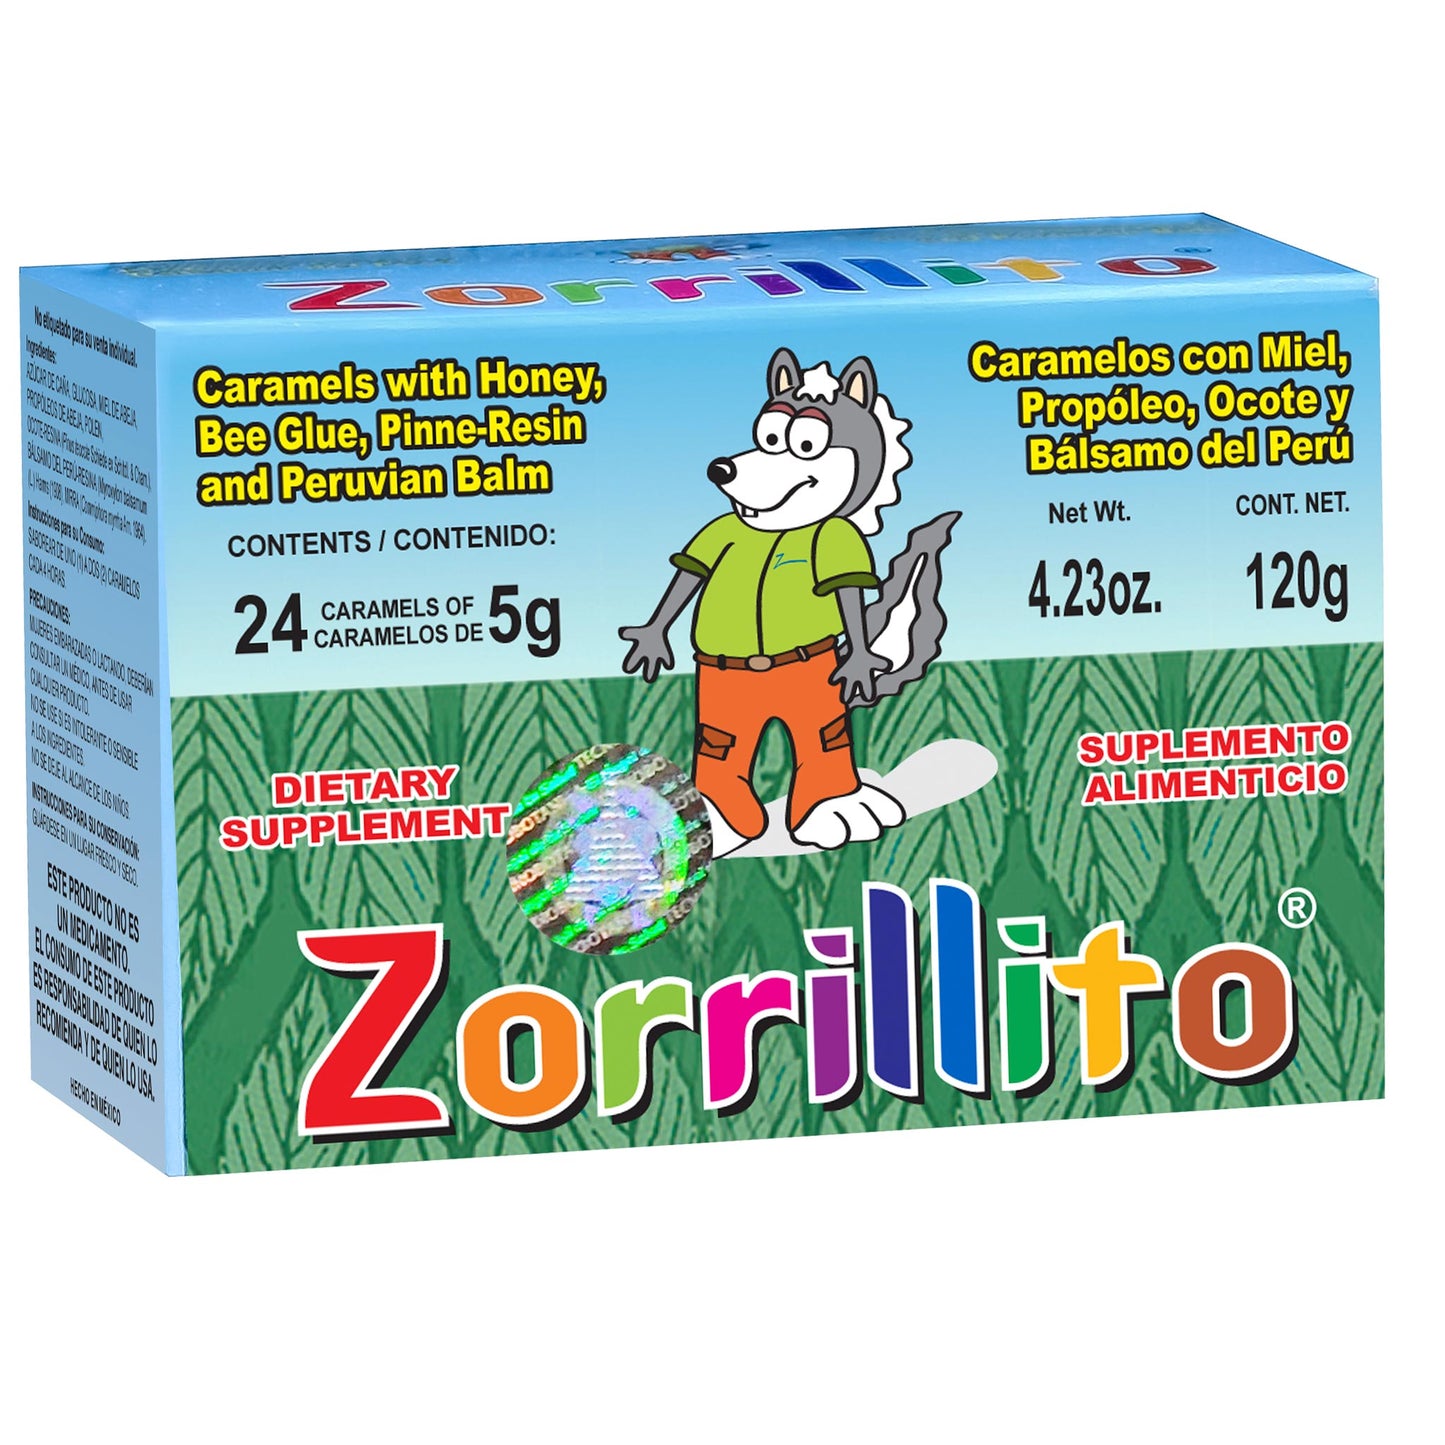 ZORRILLITO ® 24 caramelos